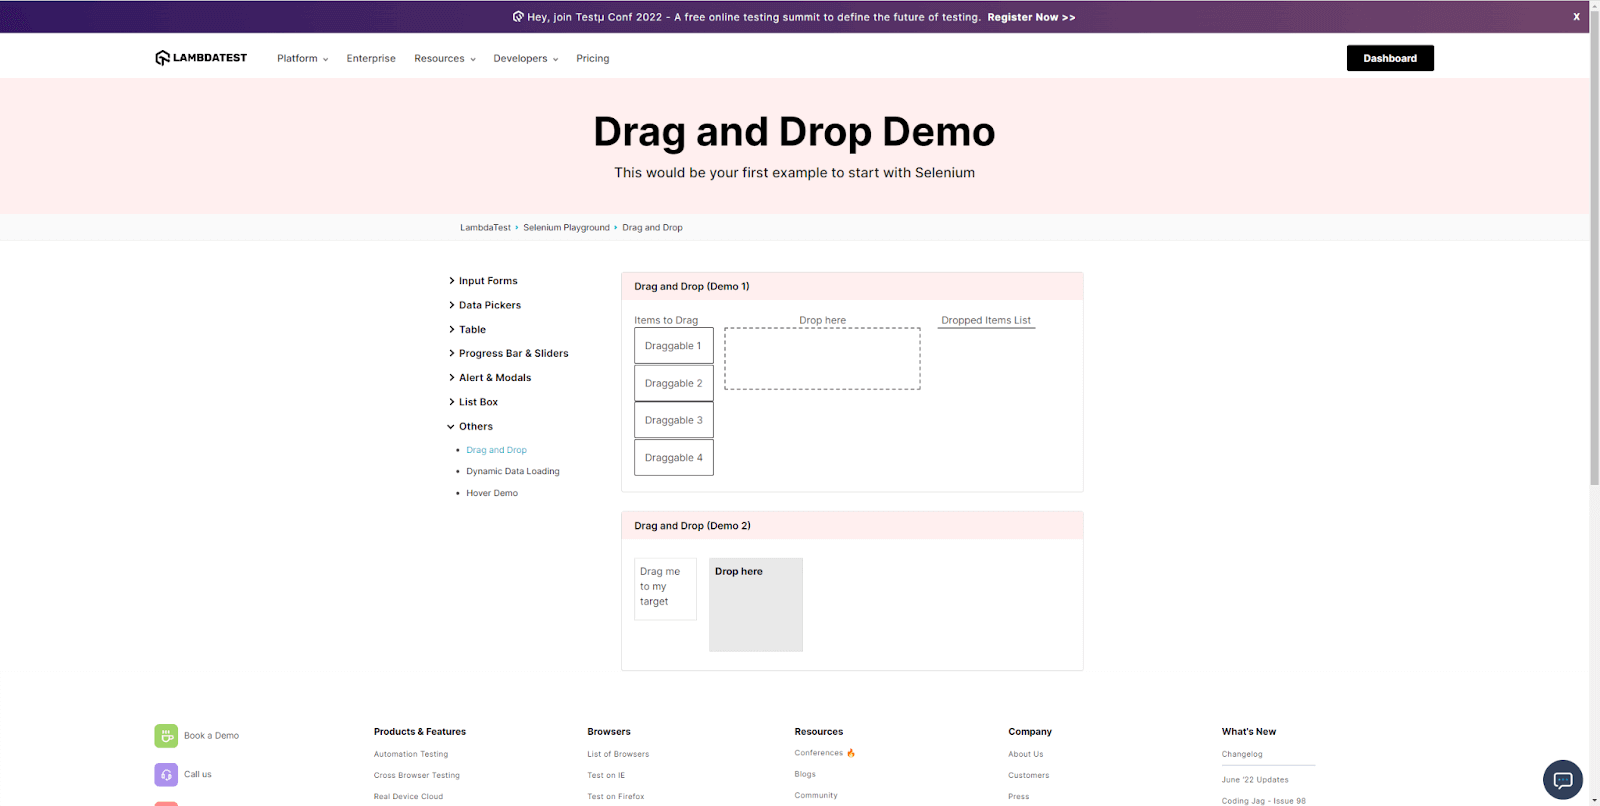 Drag and Drop Demo